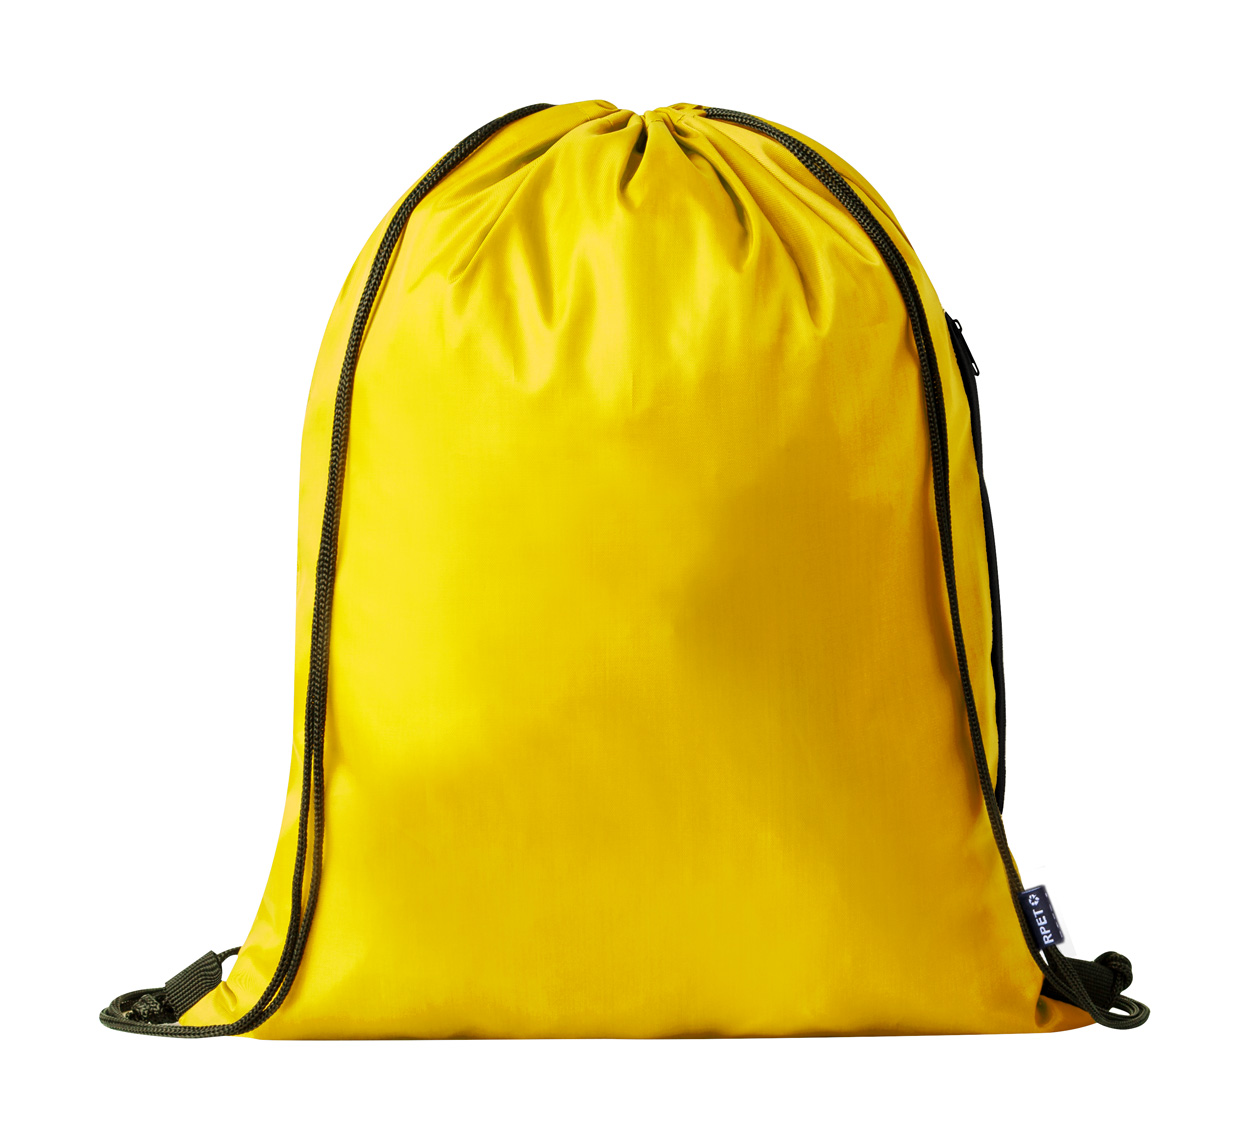 Hildan RPET drawstring bag - yellow